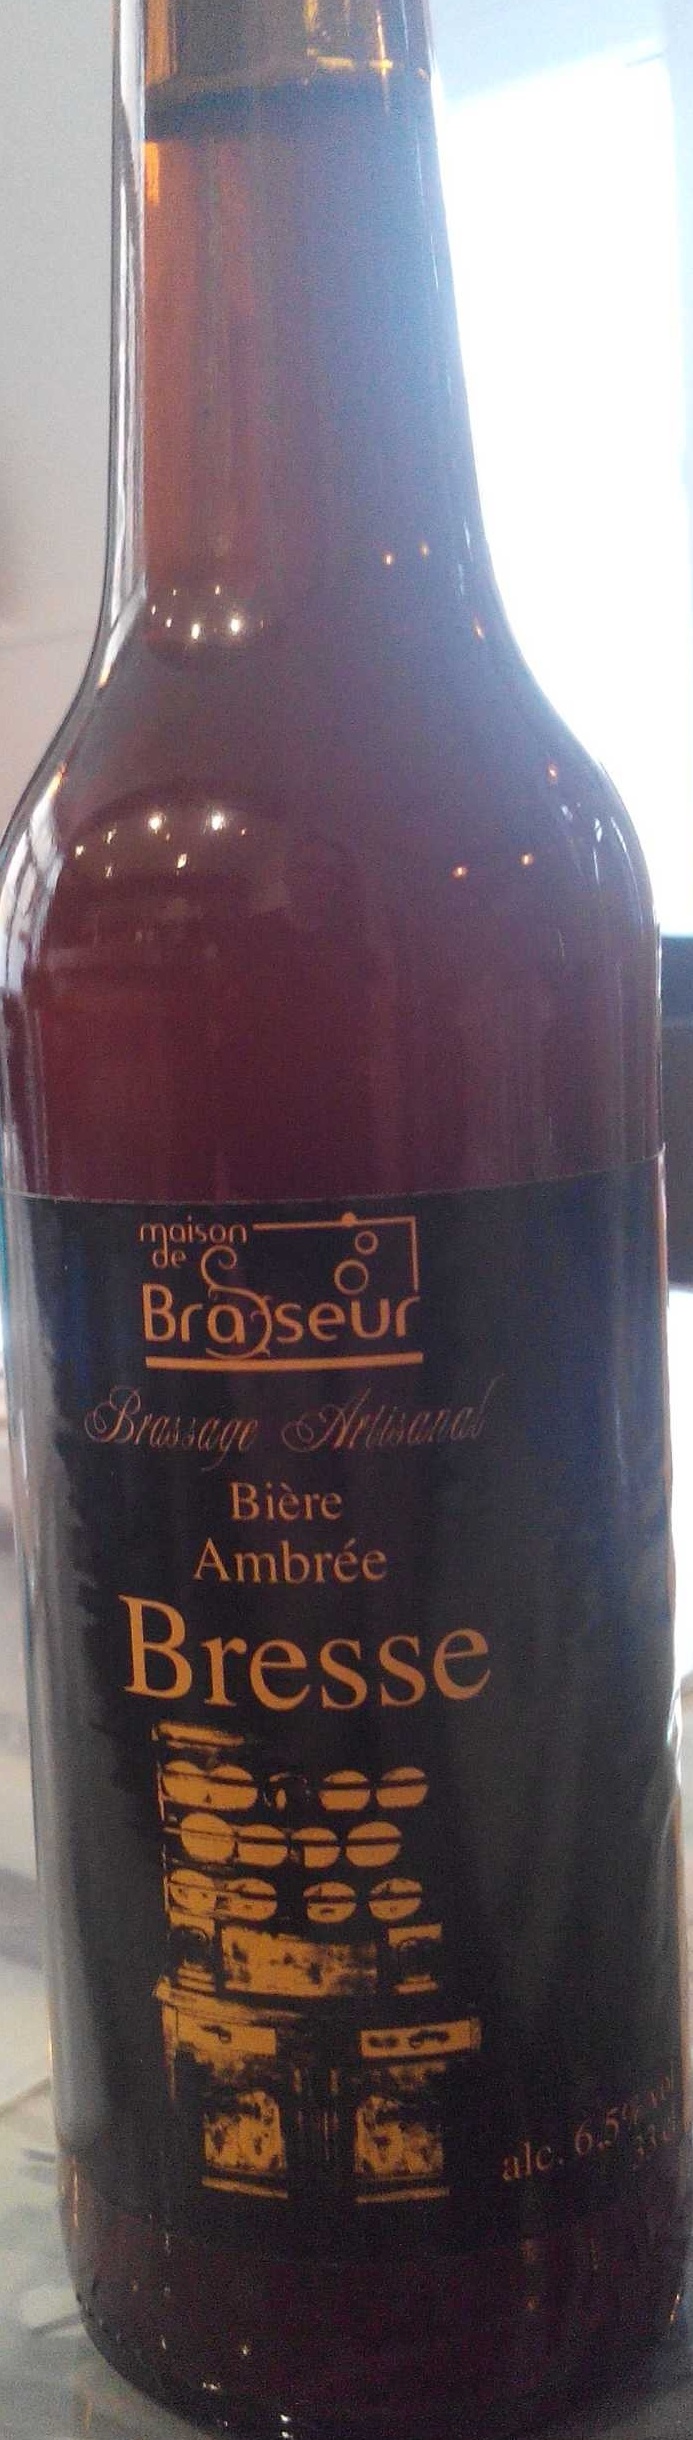 Bresse - Product - fr